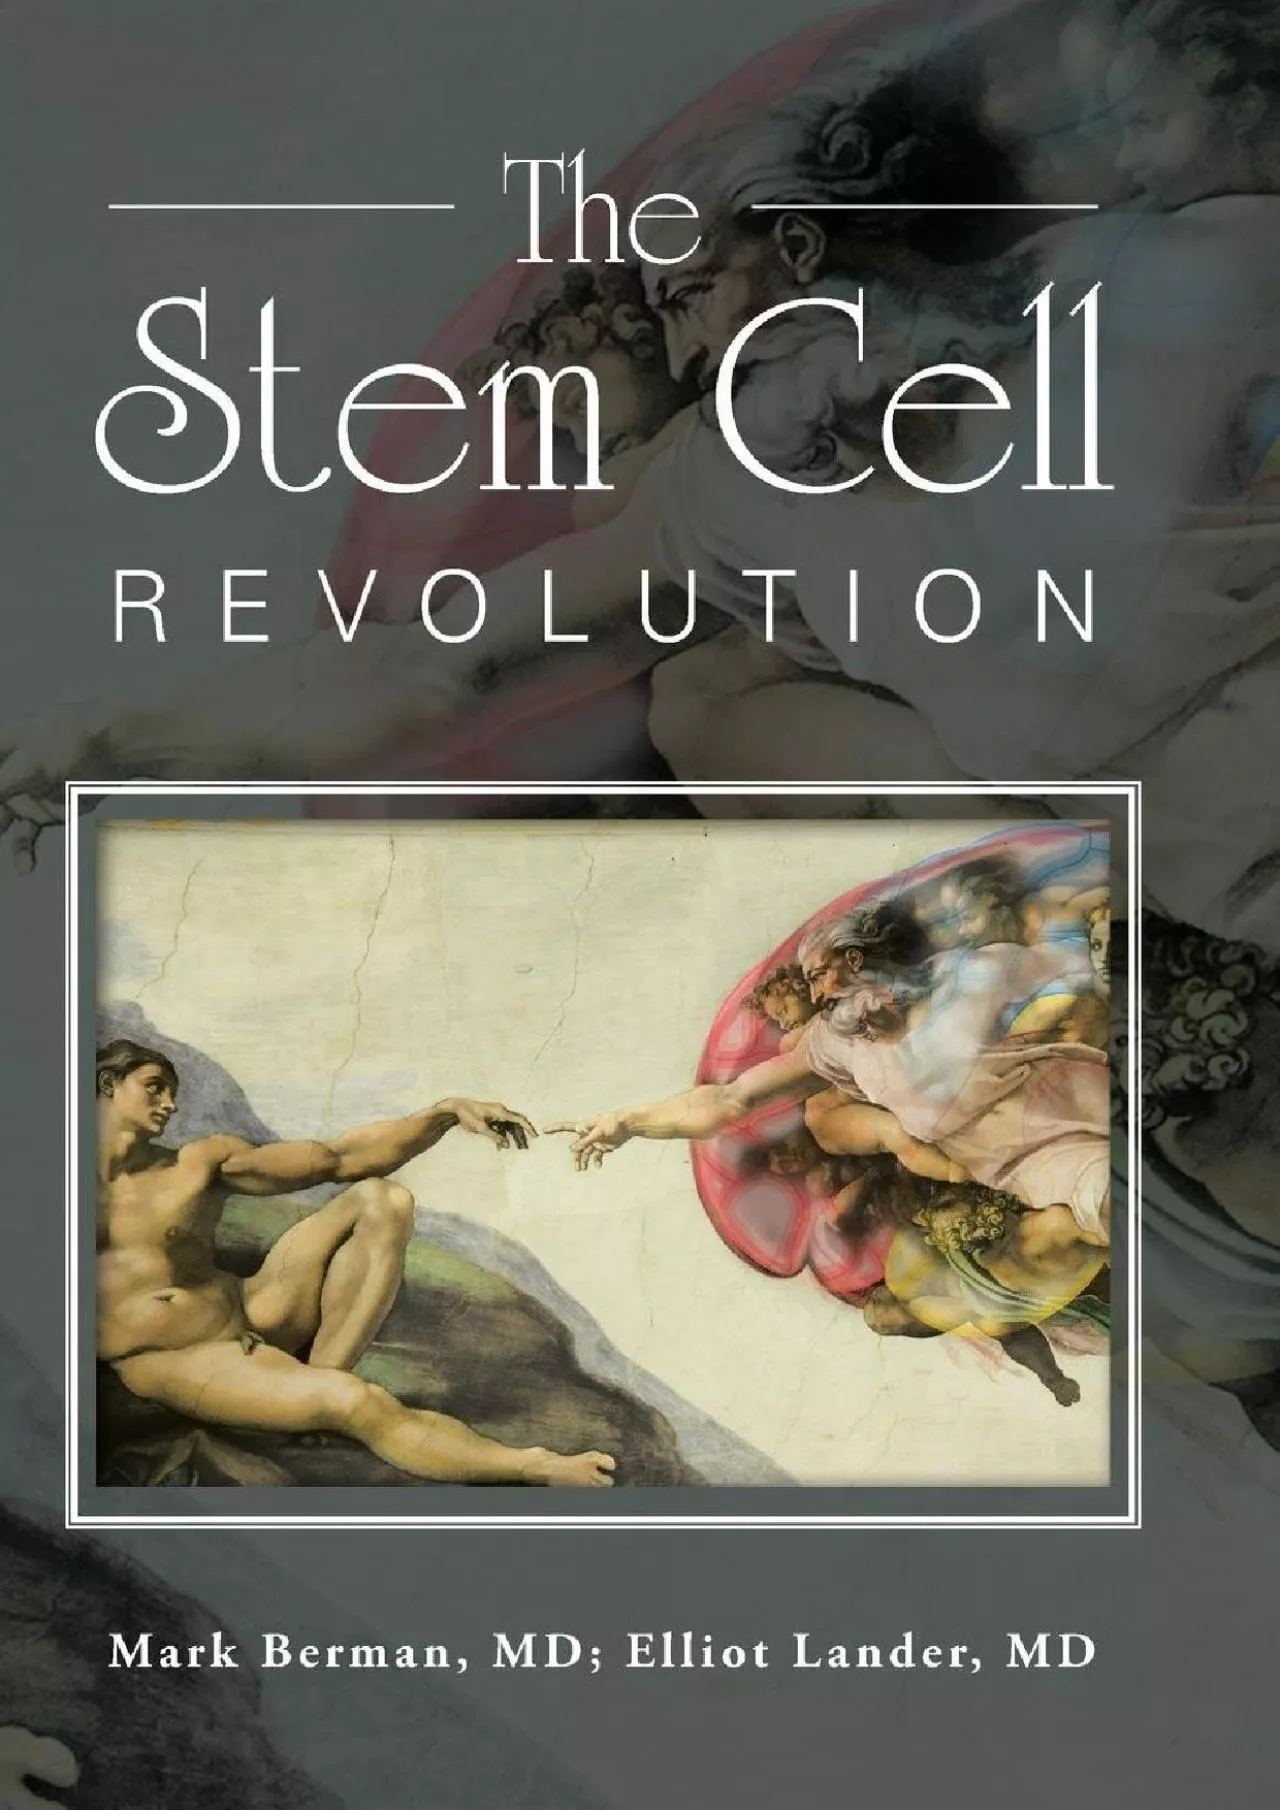 (DOWNLOAD)-The Stem Cell Revolution